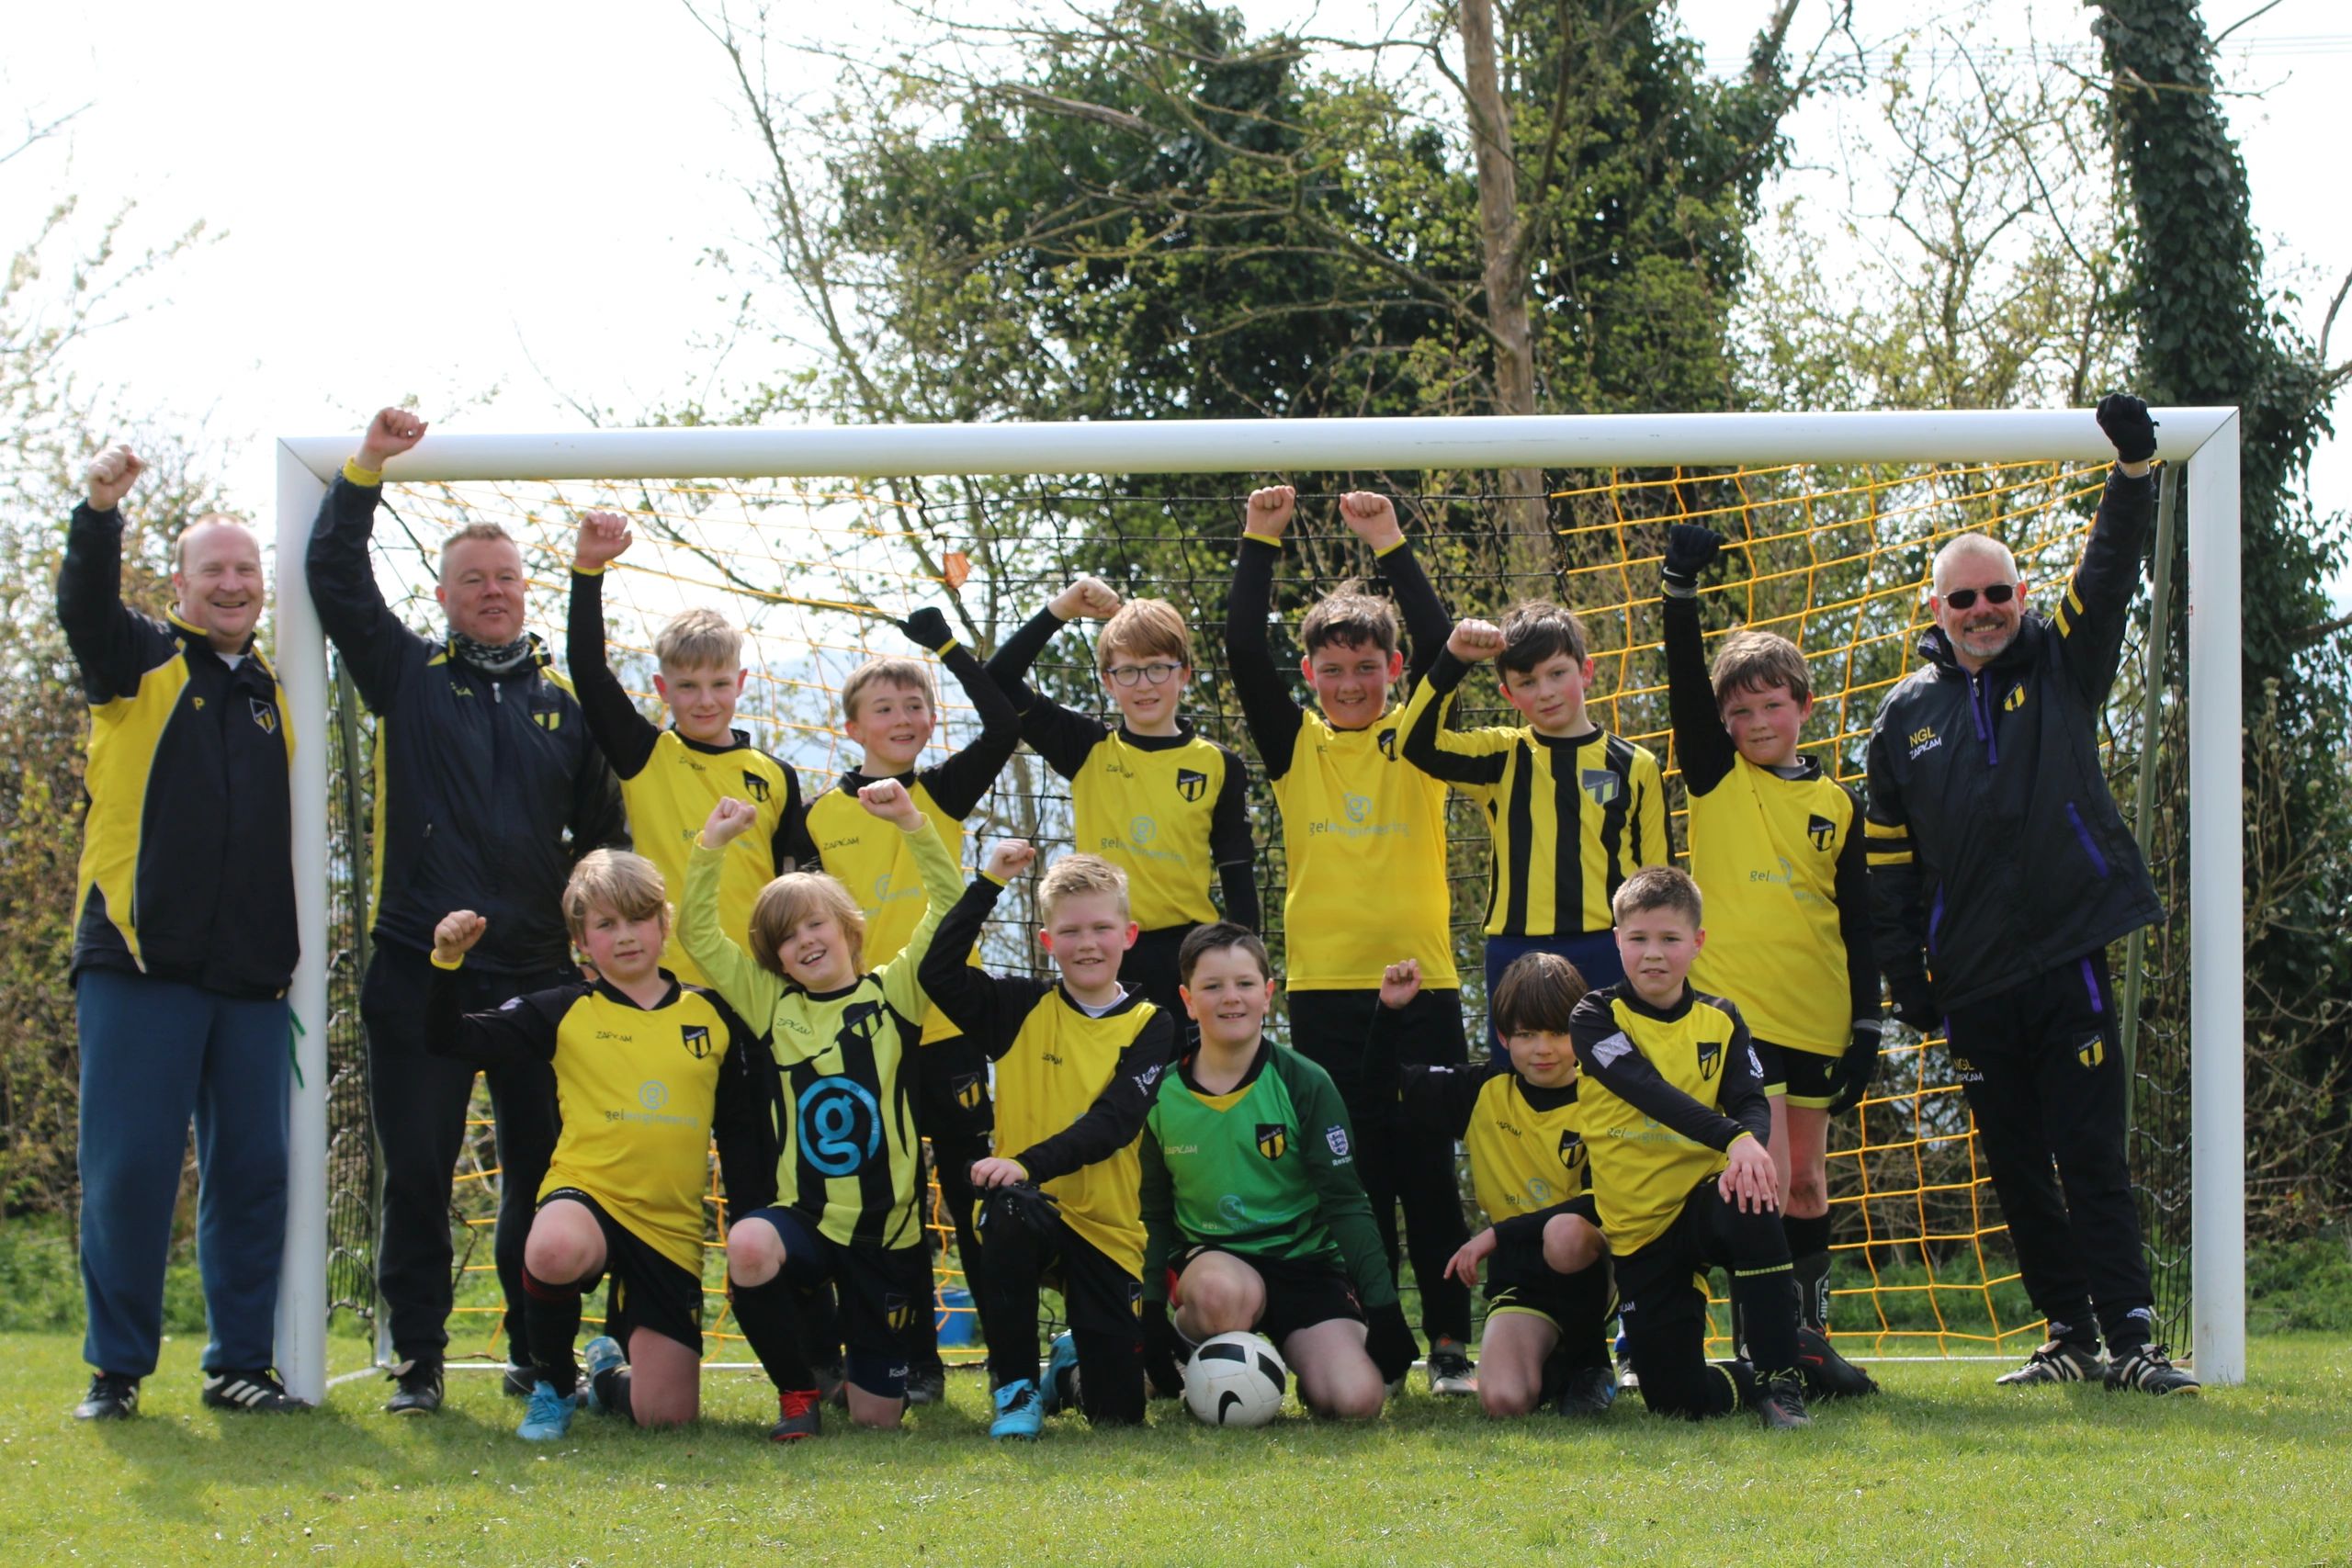 Randwick Football Club Foundation team photo